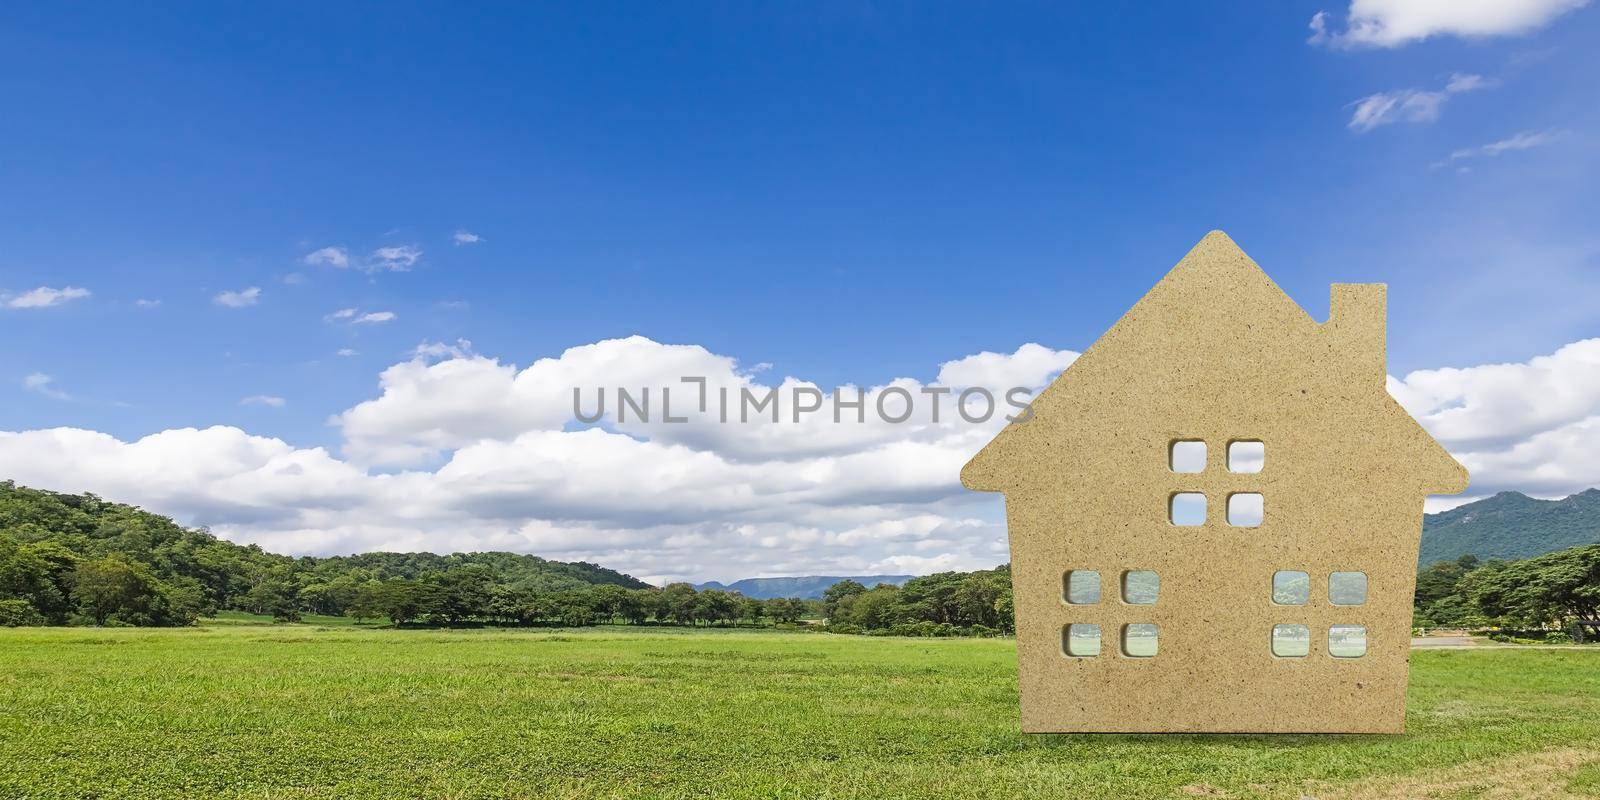 House model with landscape back background by stoonn